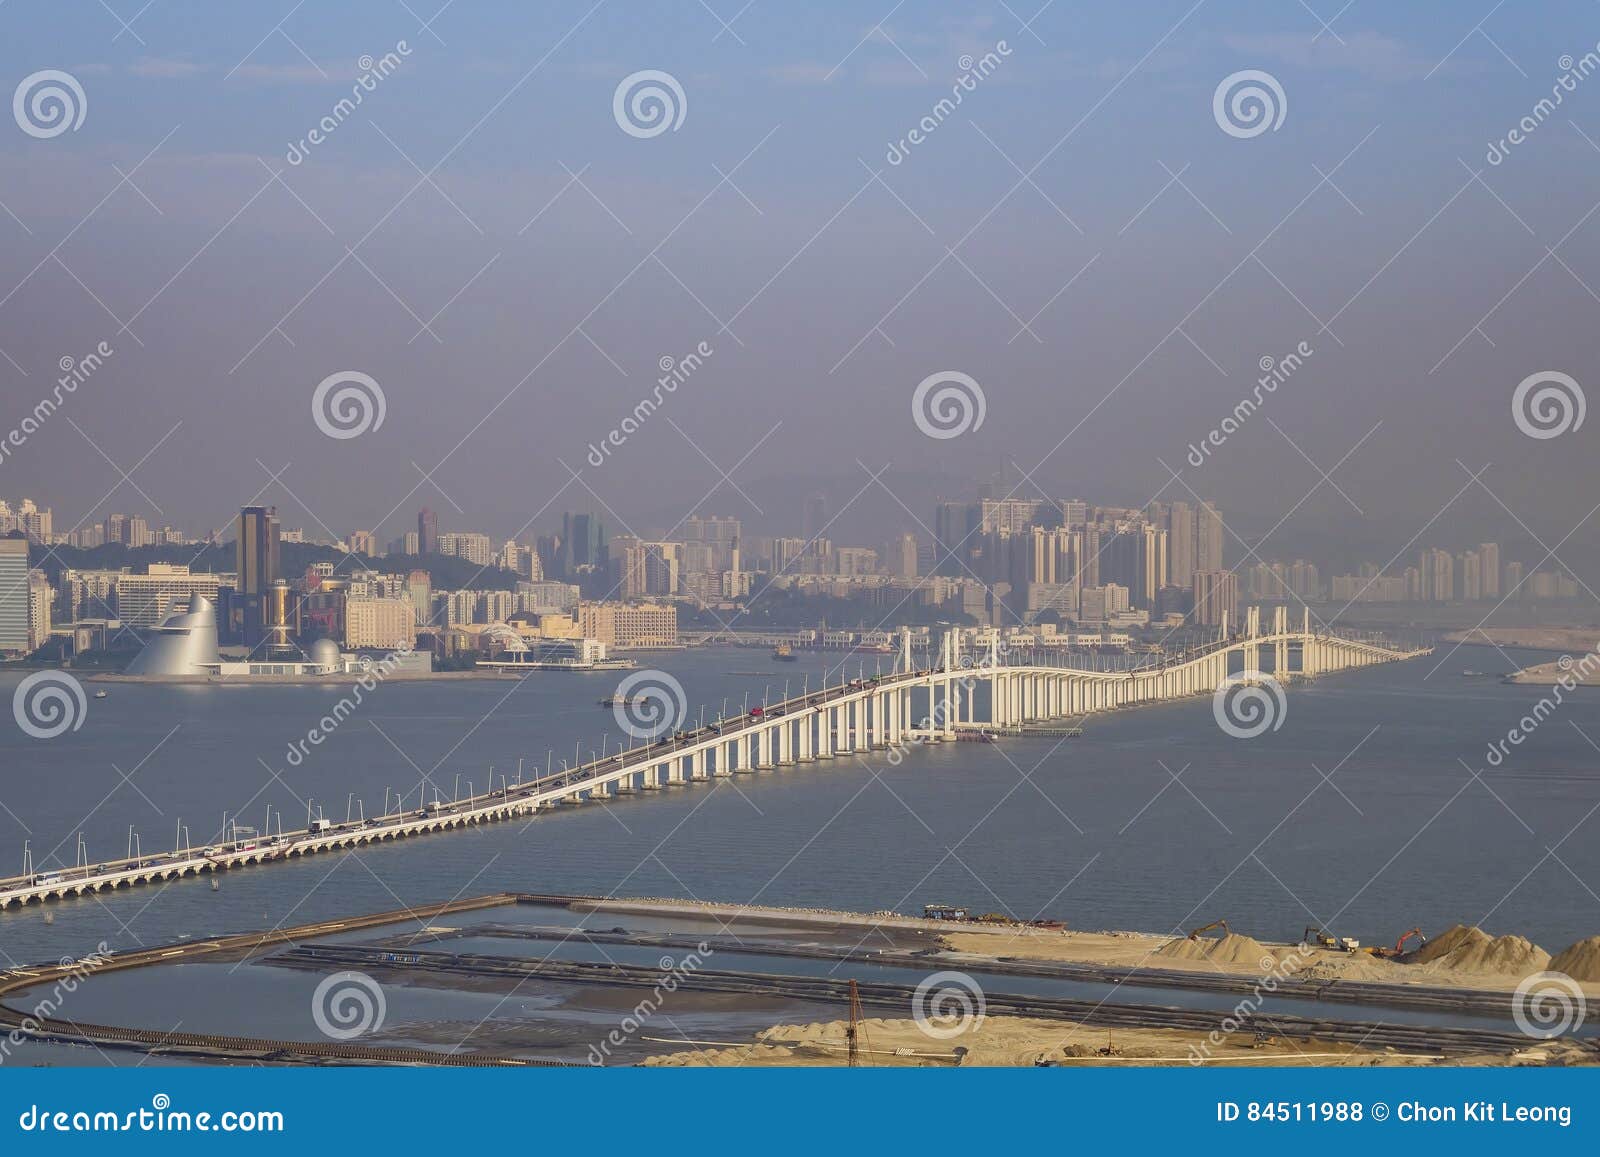 the amizade bridge and macau cityscape